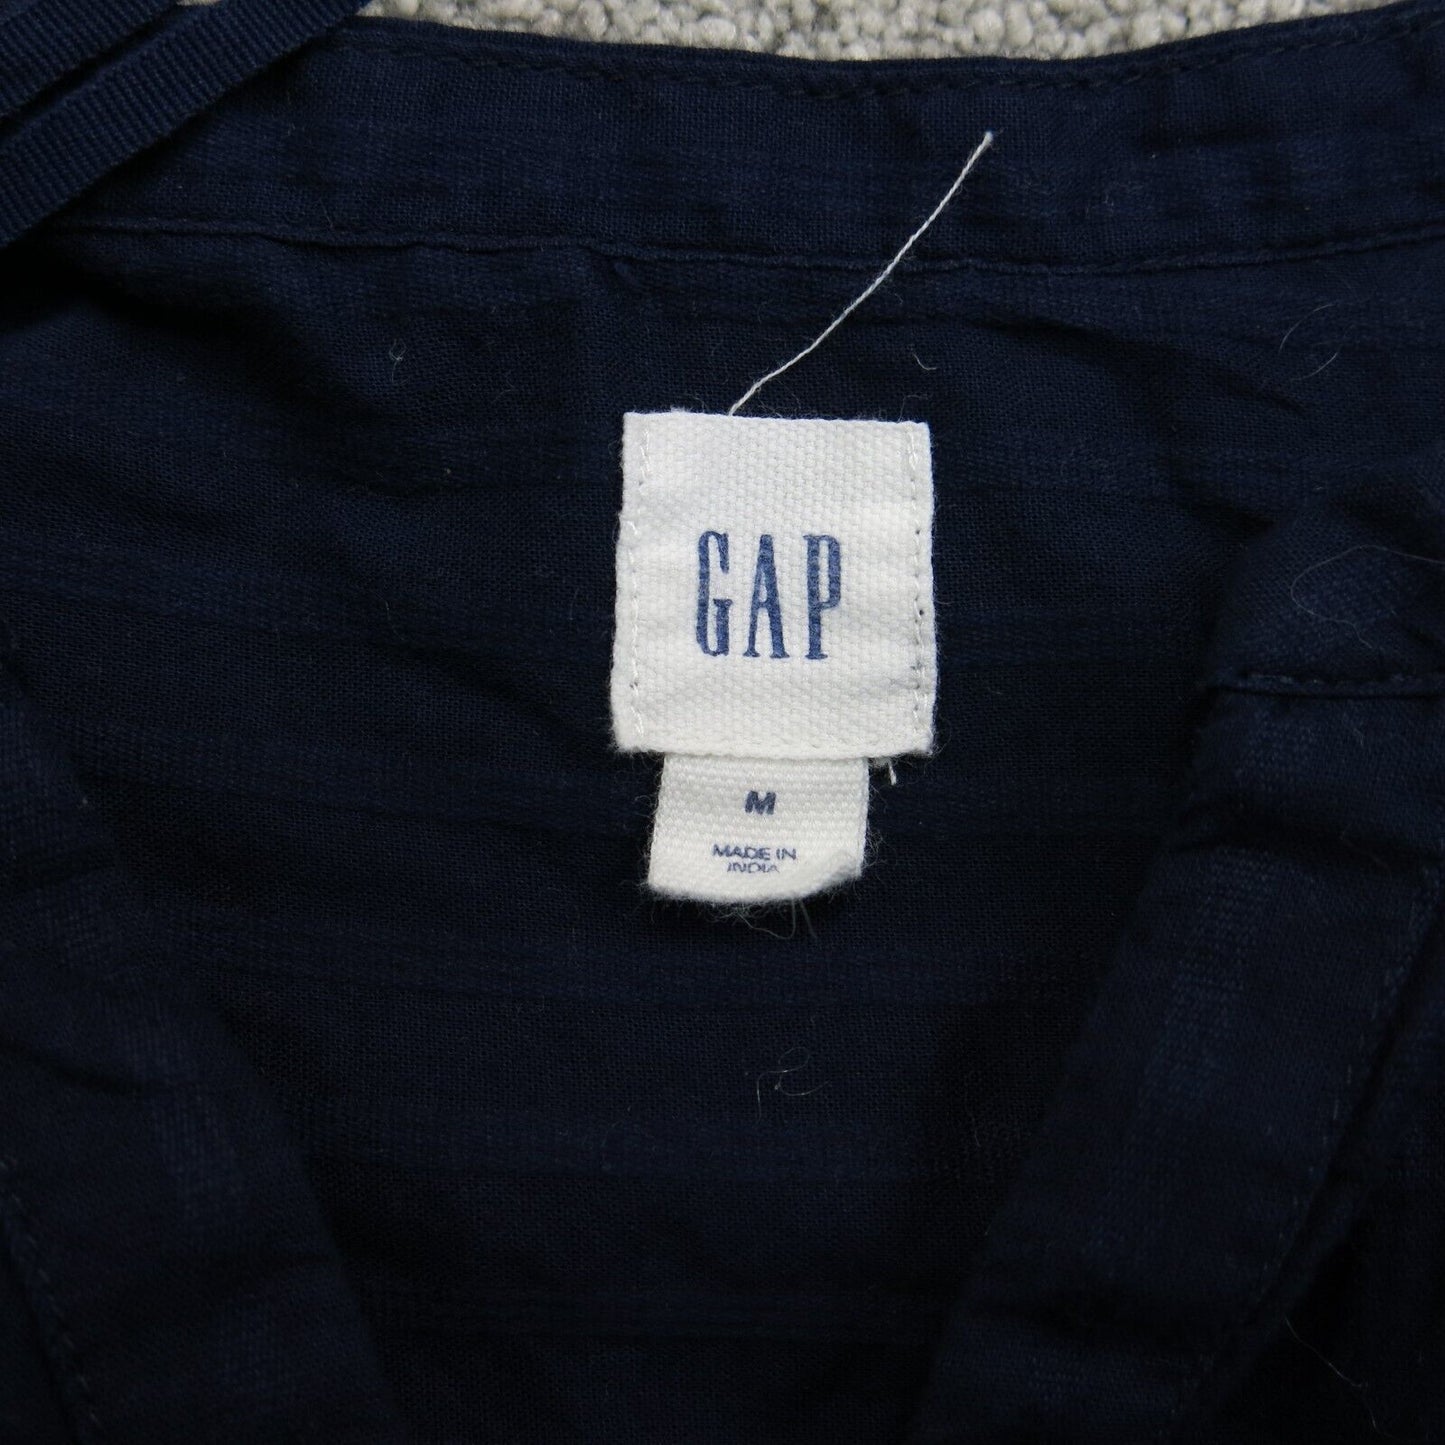 Gap Womens Striped Blouse Top 100% Cotton Cap Sleeve V Neck Navy Blue Sz Medium